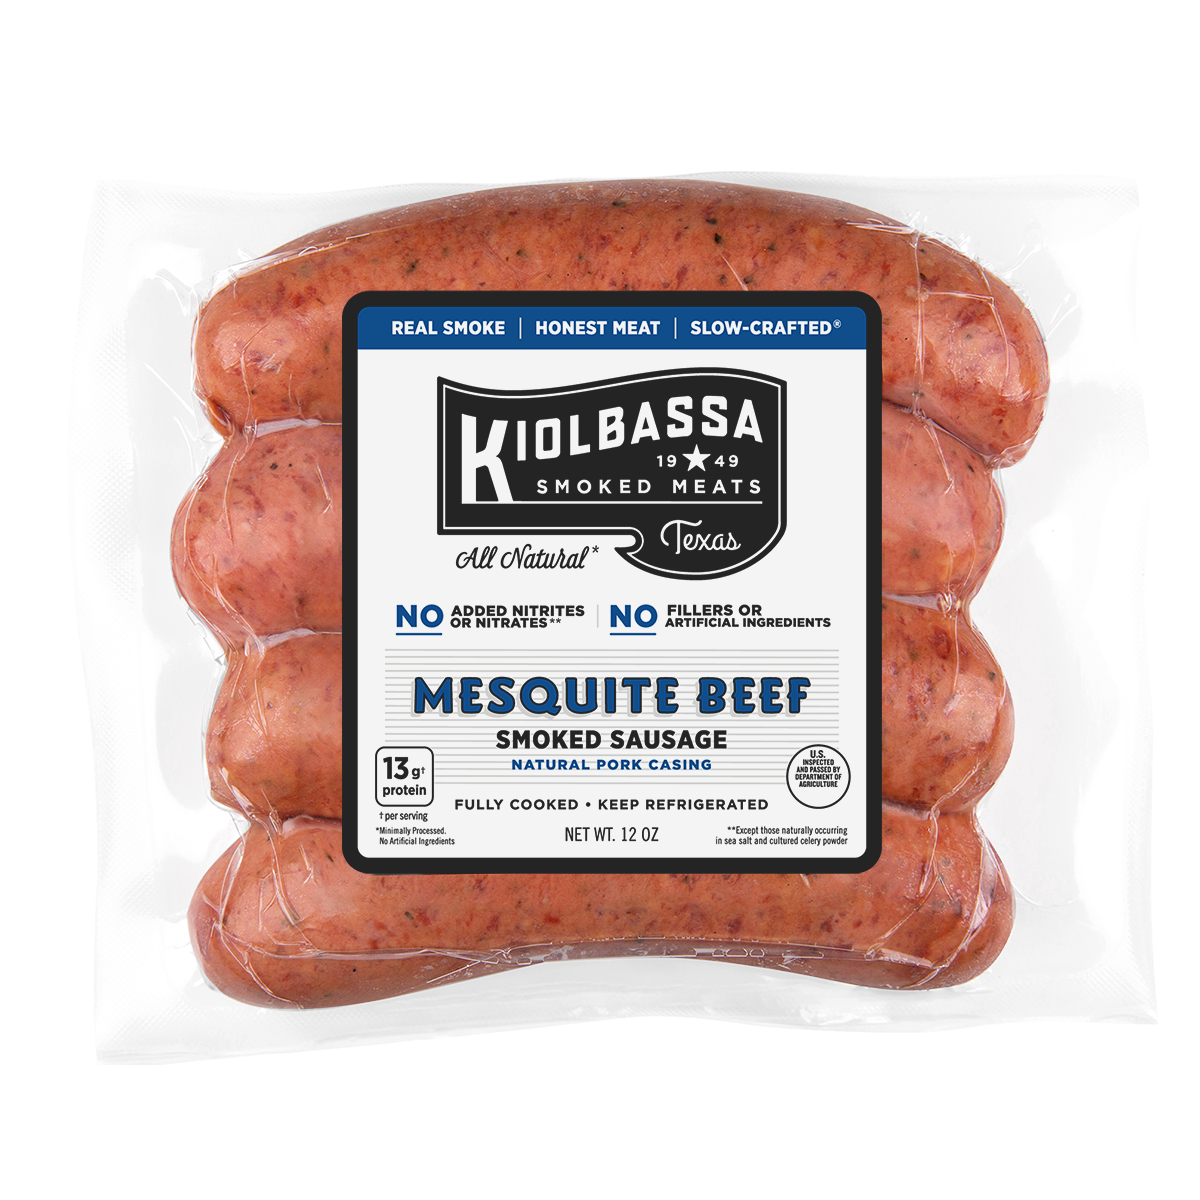 Mesquite Beef Smoked Sausage